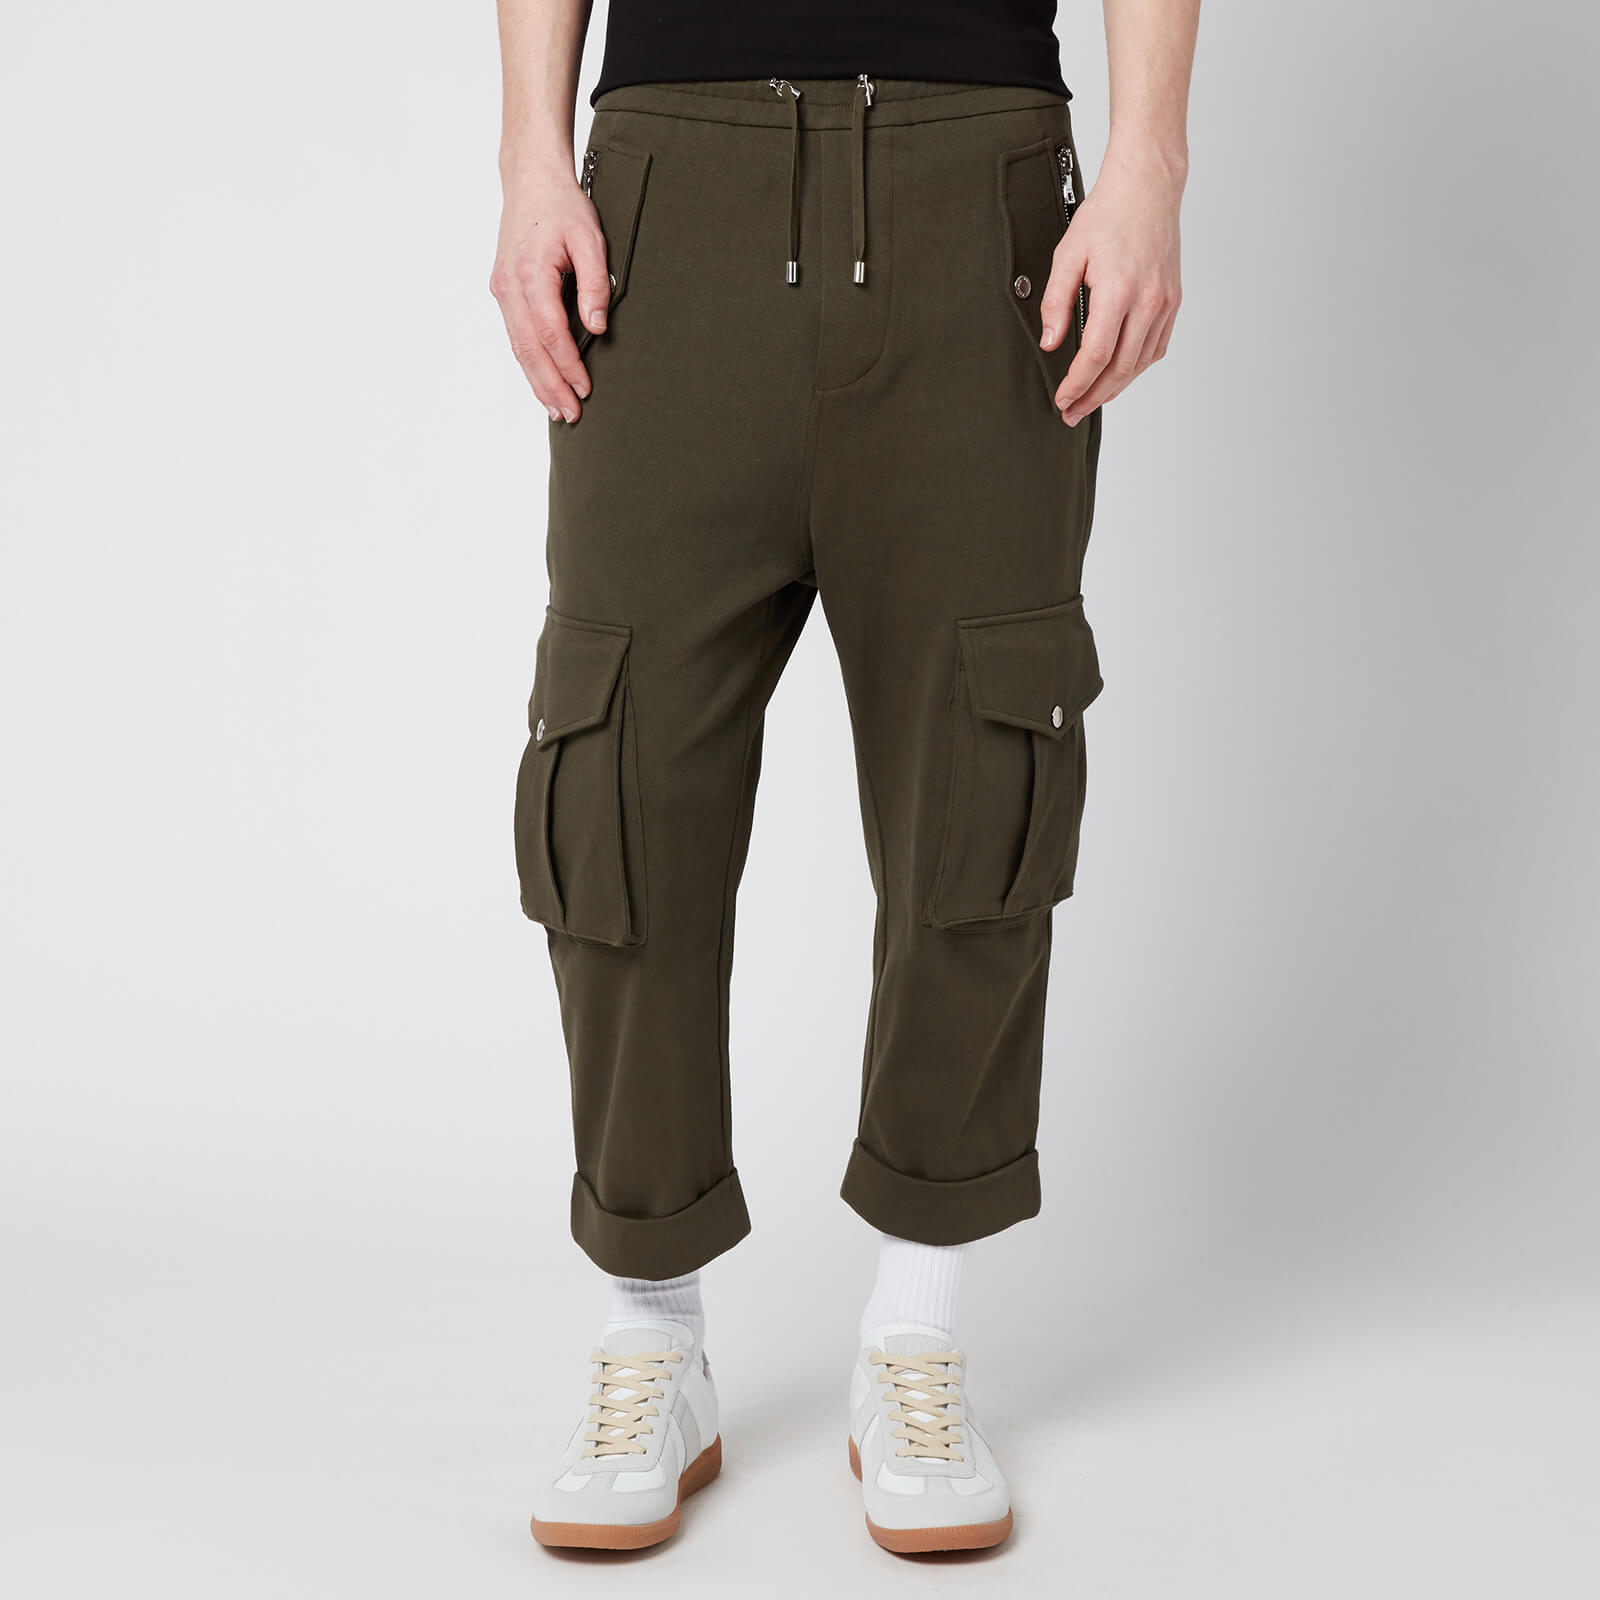 Balmain Men's Jersey Cargo Pants - Khaki - L